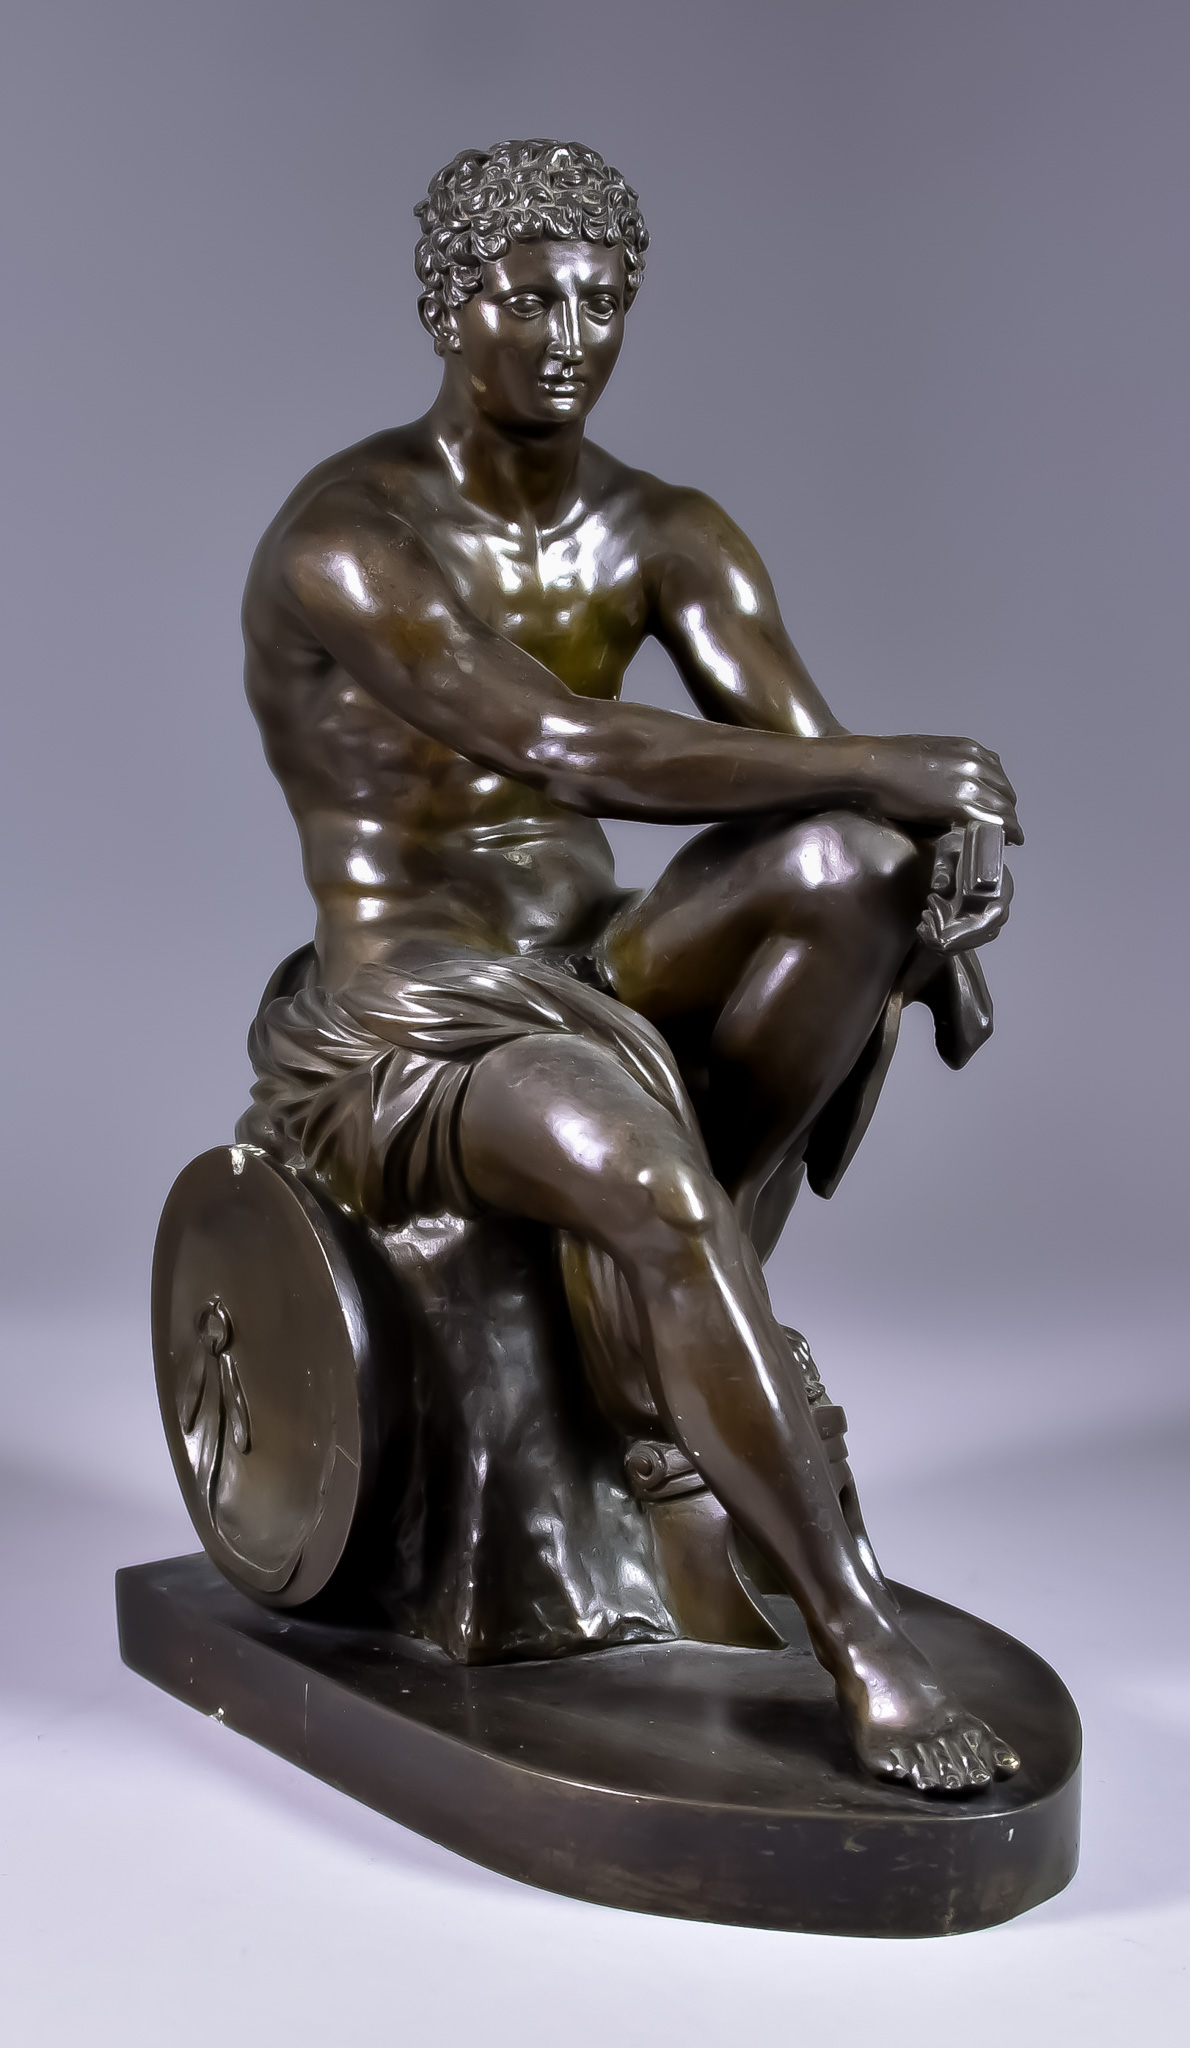 S Bordoni (19th Century) - Grand Tour patinated bronze - "The Ludovise Ares", on 'iron'-shaped base,